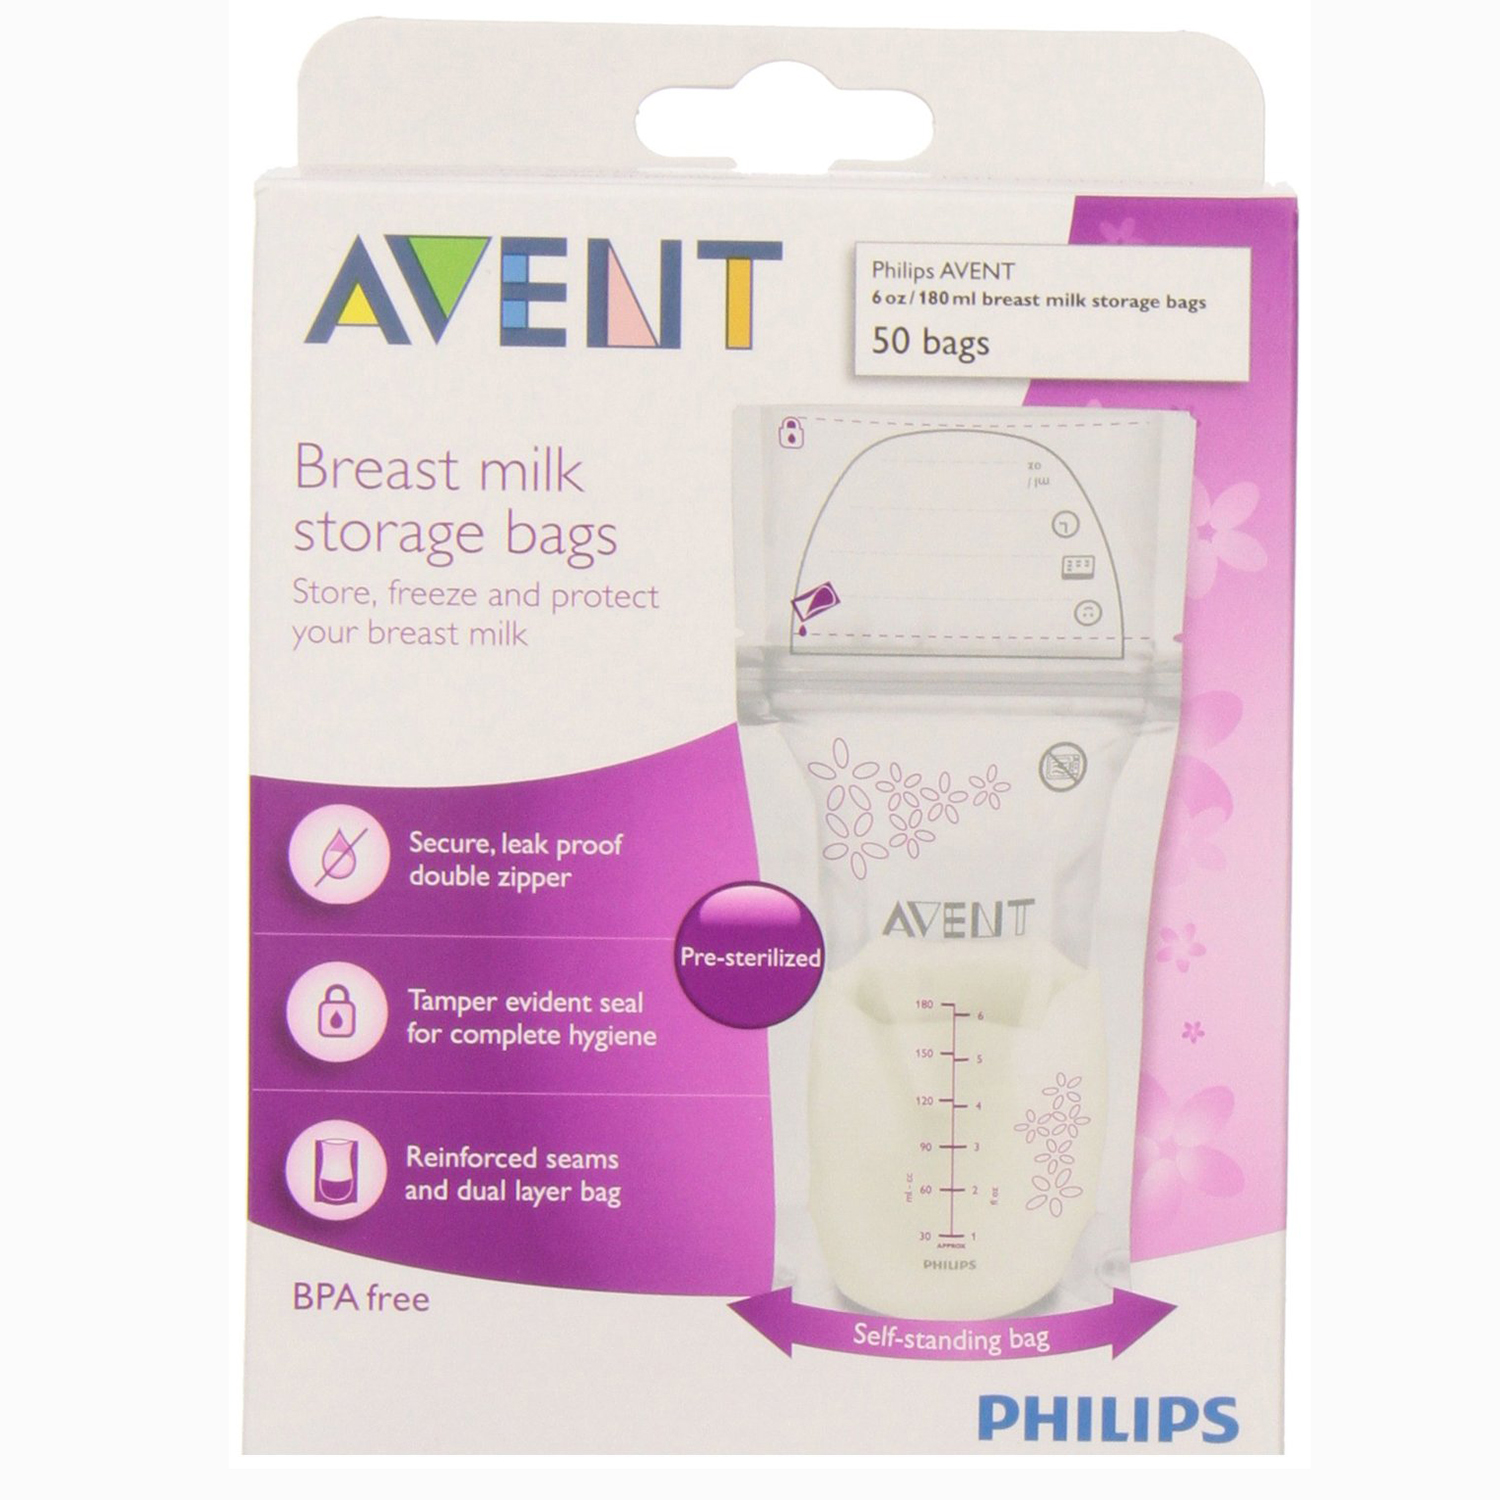 AVENT Breast Milk Storage Bags, 50 Pack 